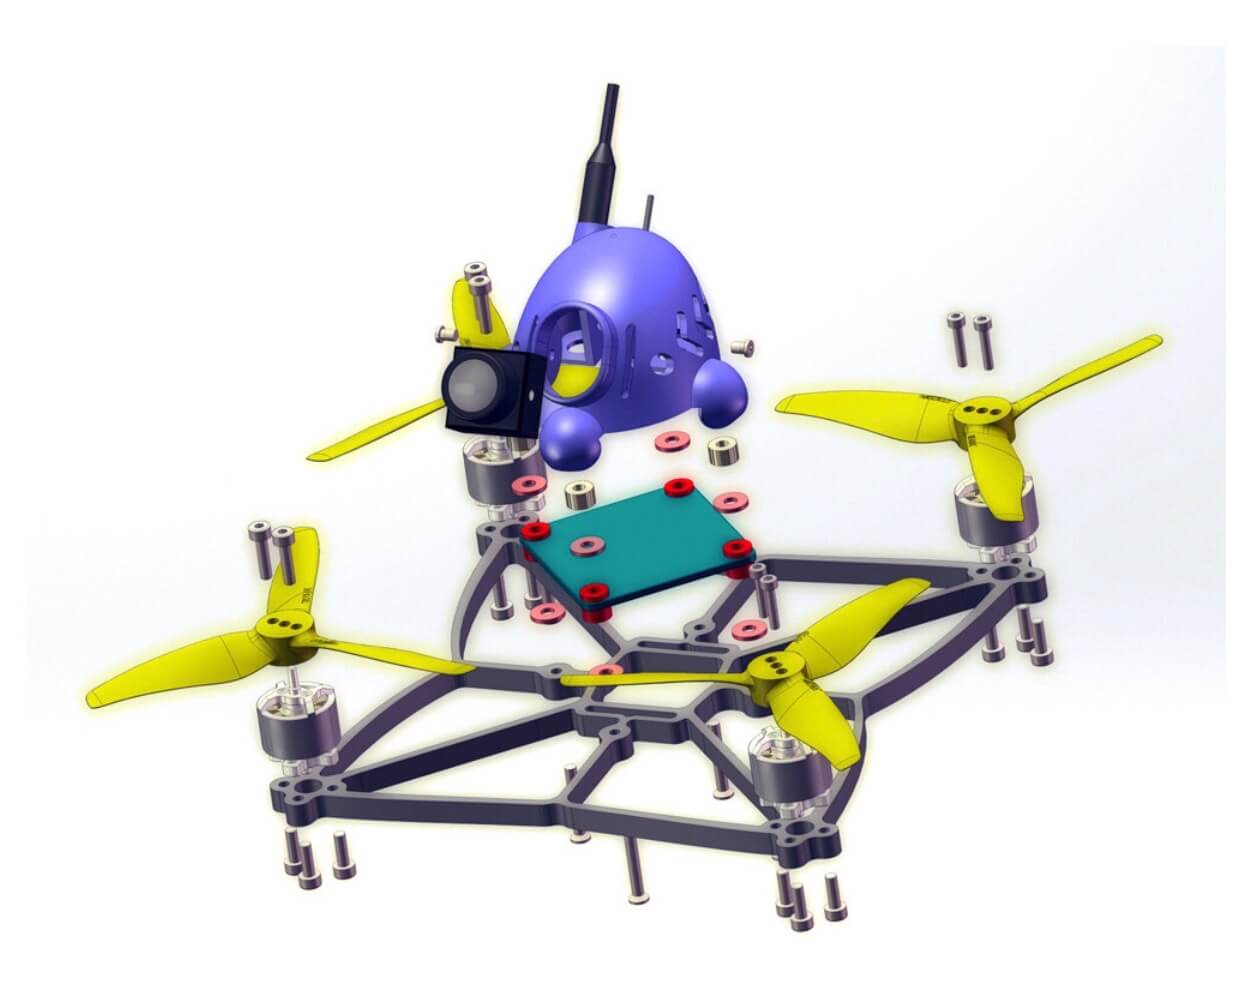 Stardrone Octopus 130mm おもしろいドローン発売